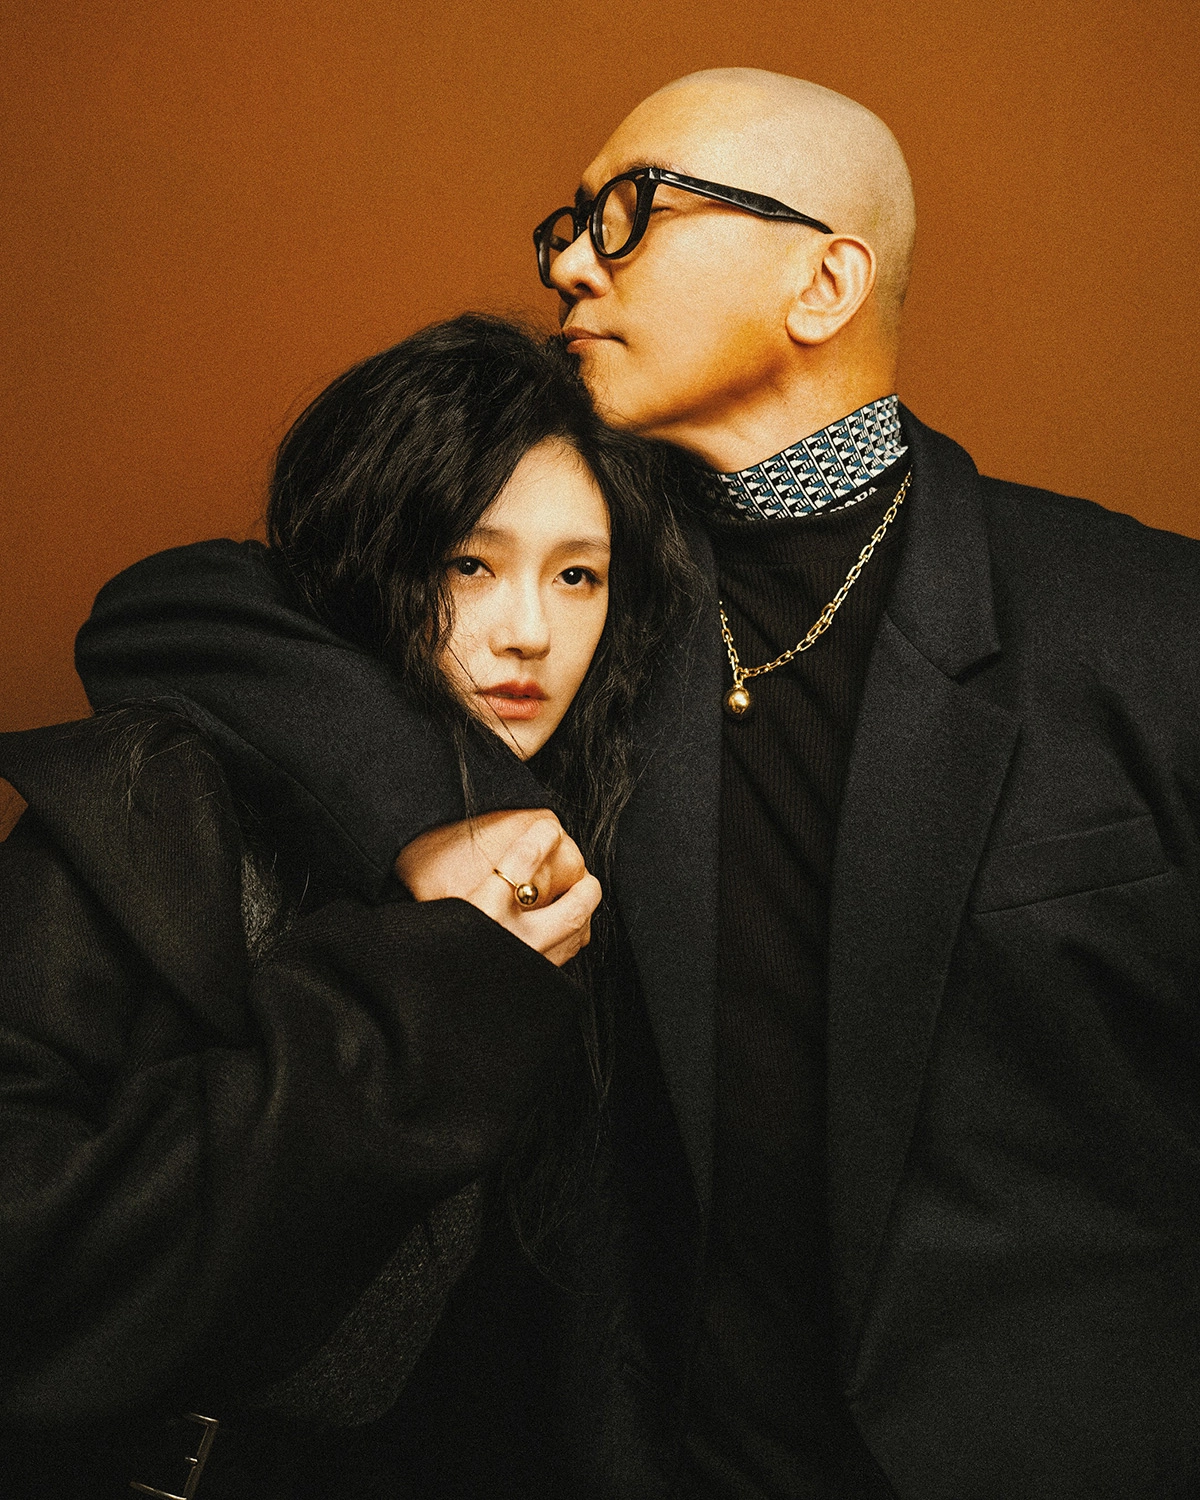 Barbie Hsu and DJ Koo cover Vogue Taiwan October 2022 by Zhong Lin